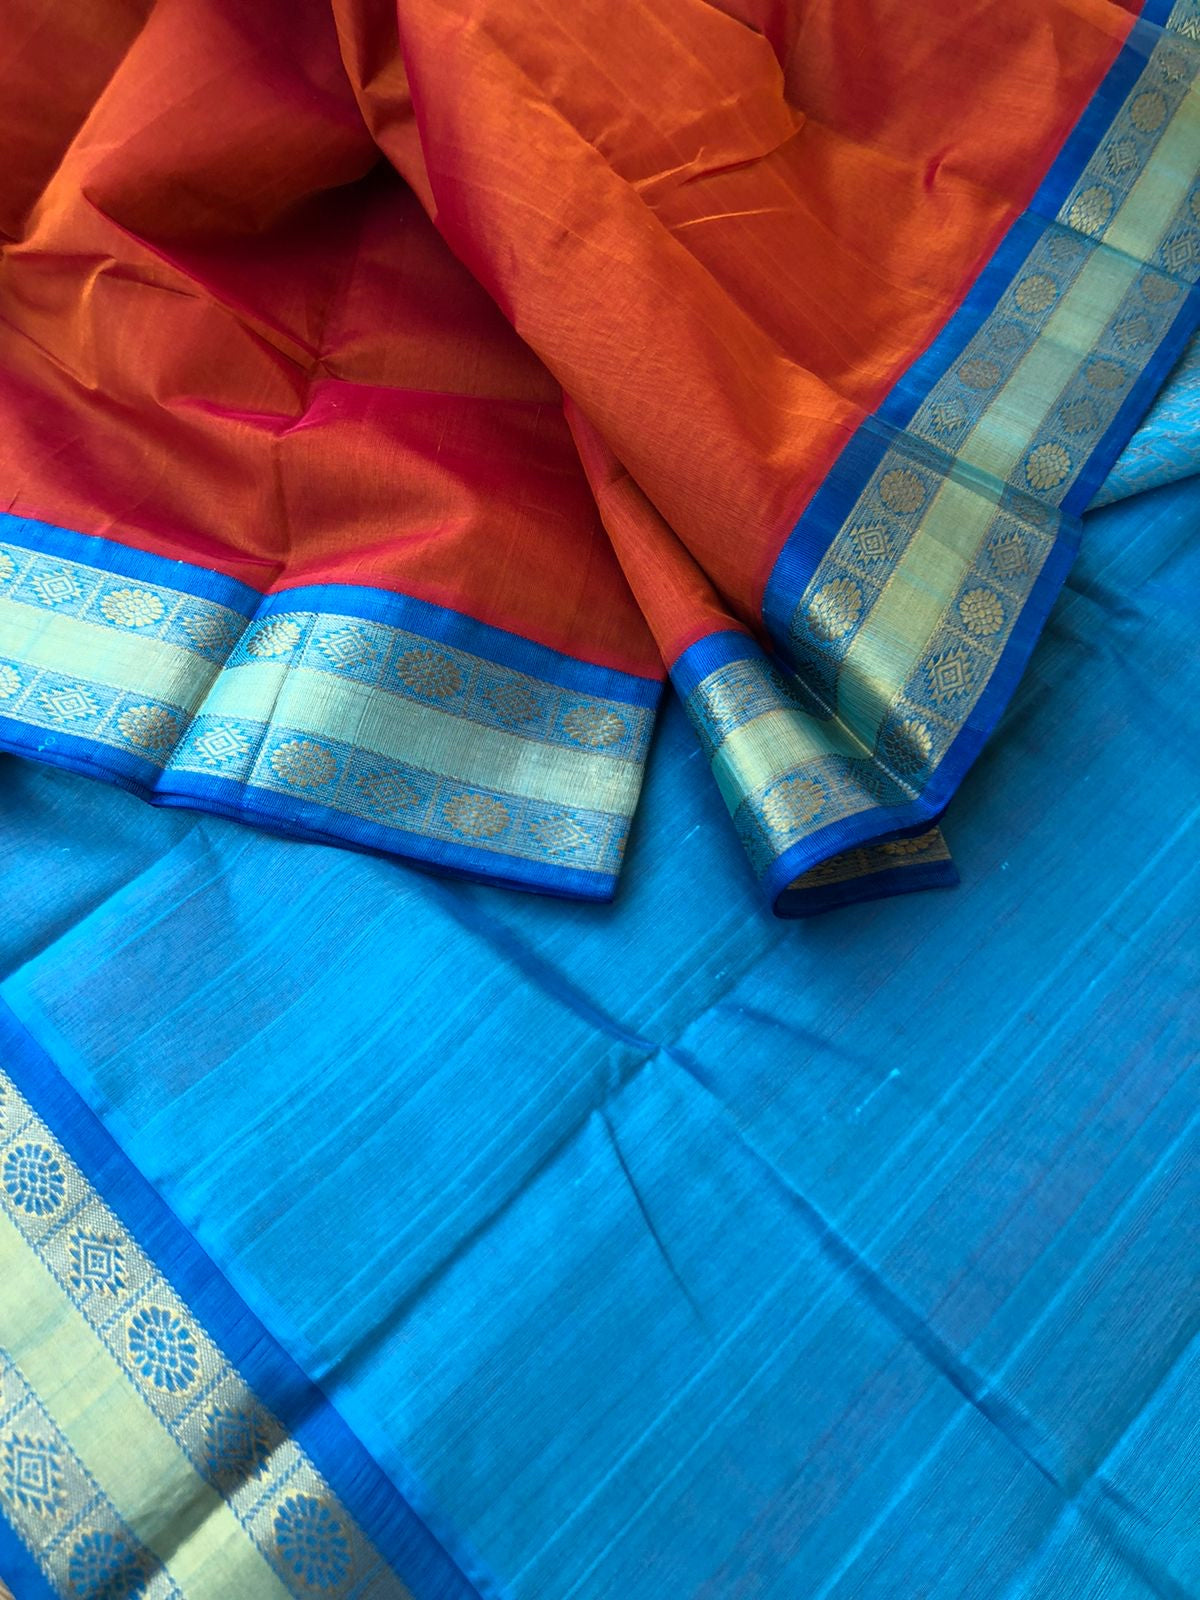 Margazhi Vibrs on Korvai Silk Cotton - rusty orange and blue